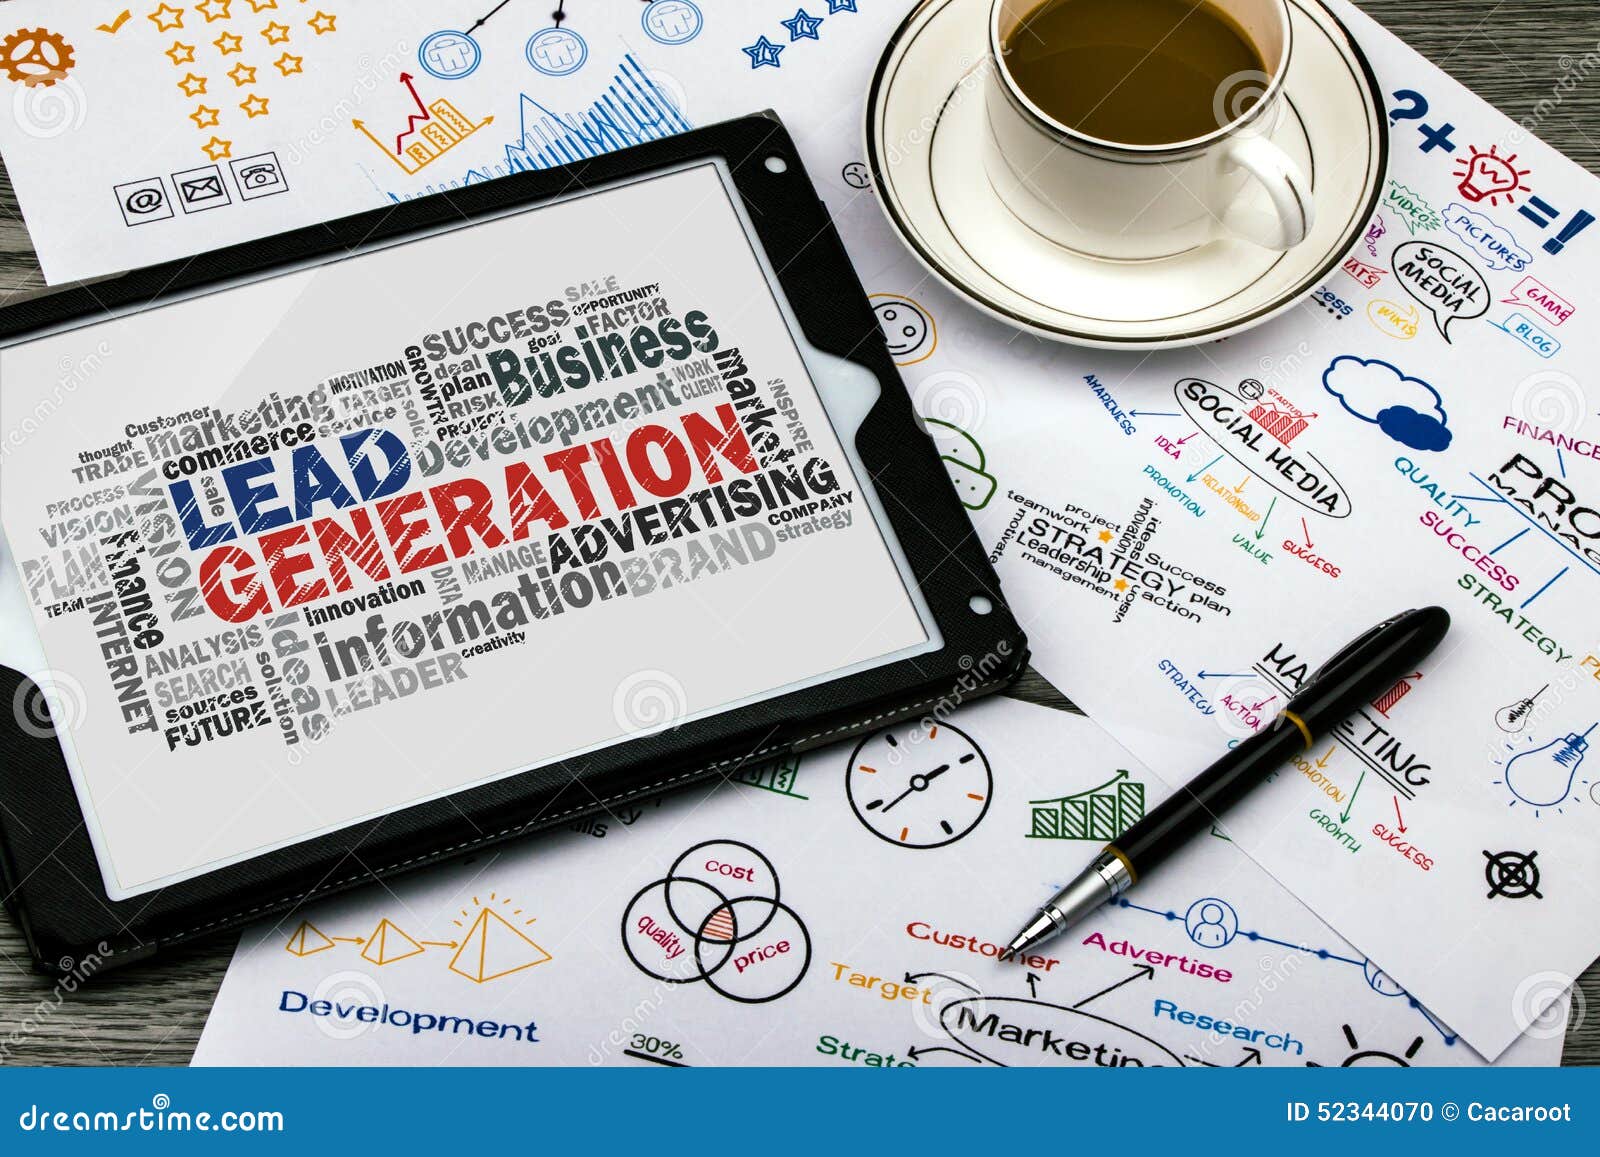 lead generation word cloud